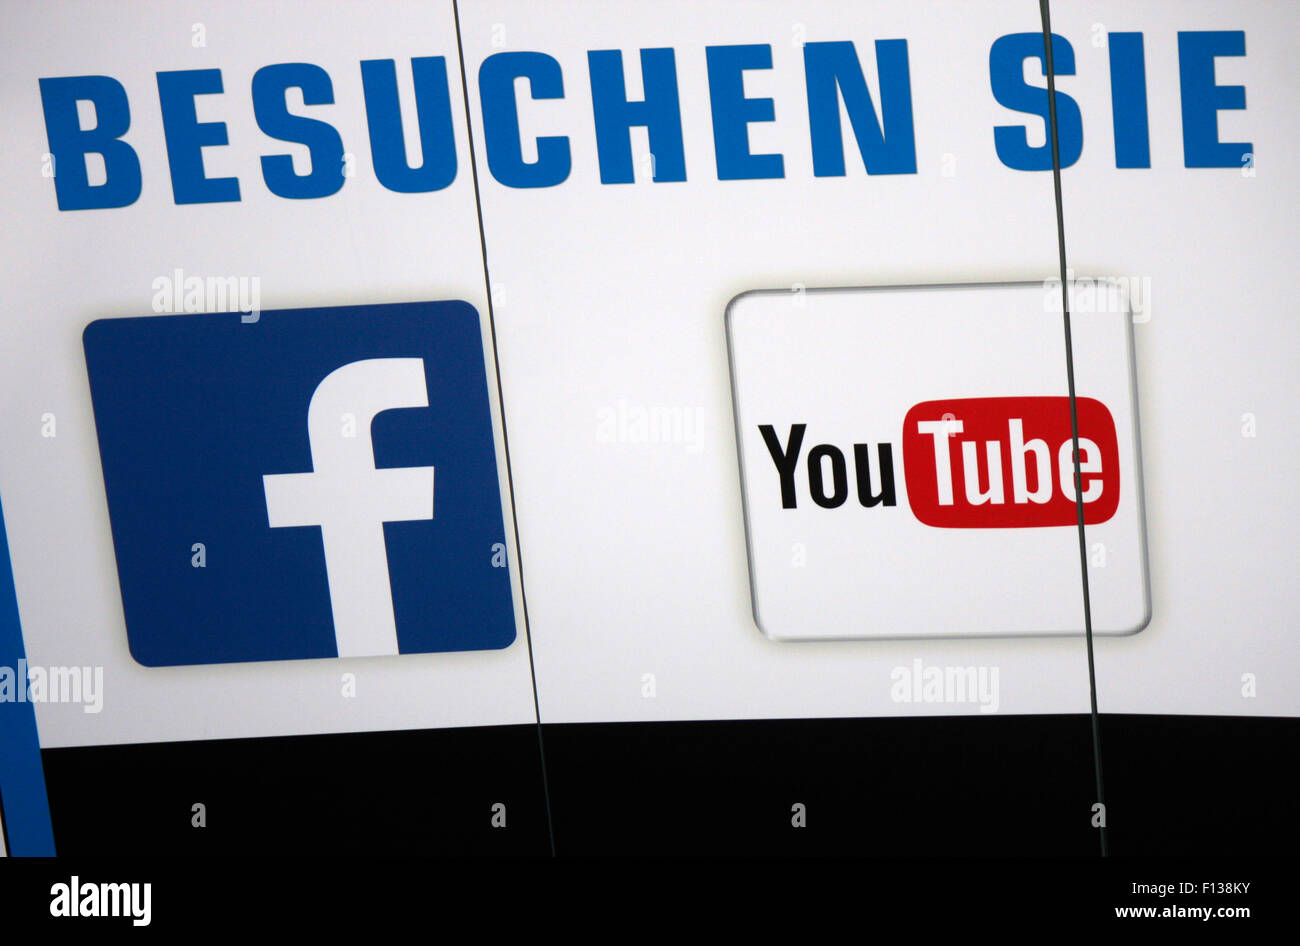 Markennamen: "Facebook" Und "Youtube", Frankfurt Am Main. Stockfoto